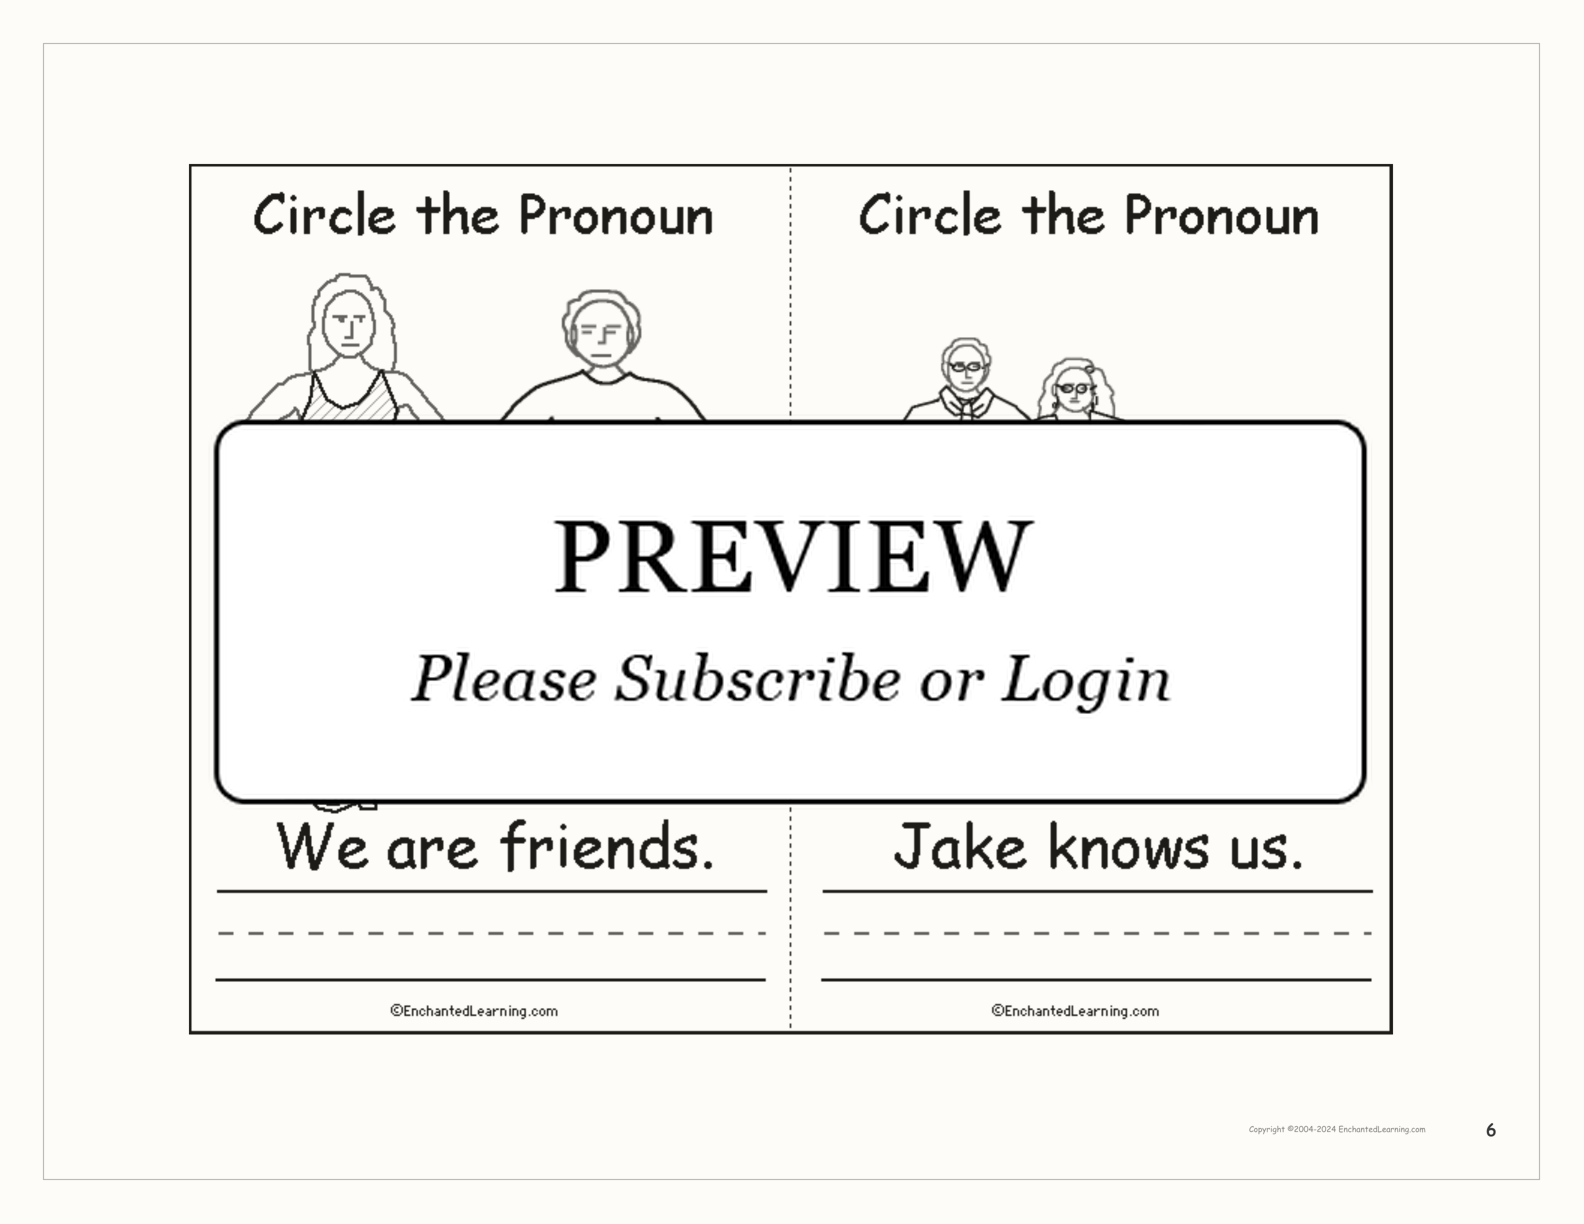 Circle the Pronouns Book interactive printout page 6